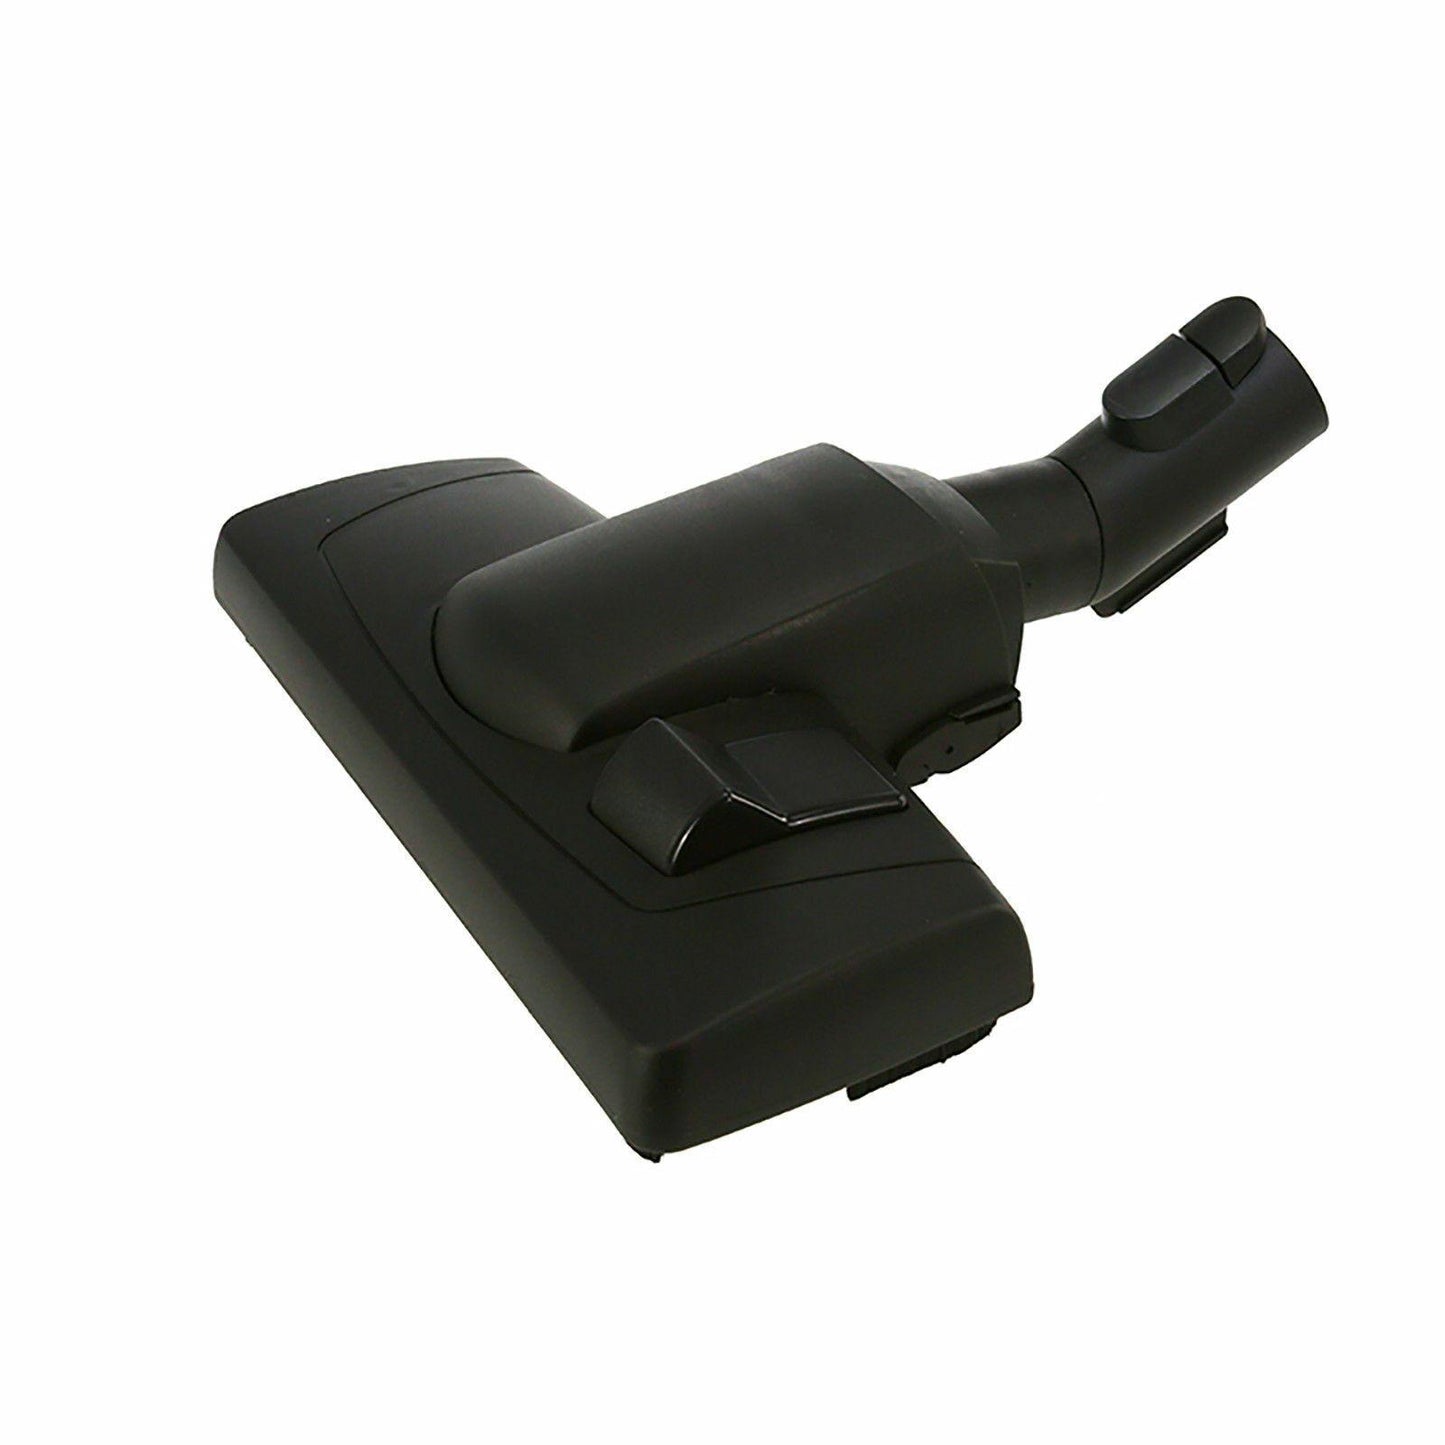 Combo Locking Floor head Brush 35mm For Miele S5 S8 S5210 S5211 S8310 Sparesbarn